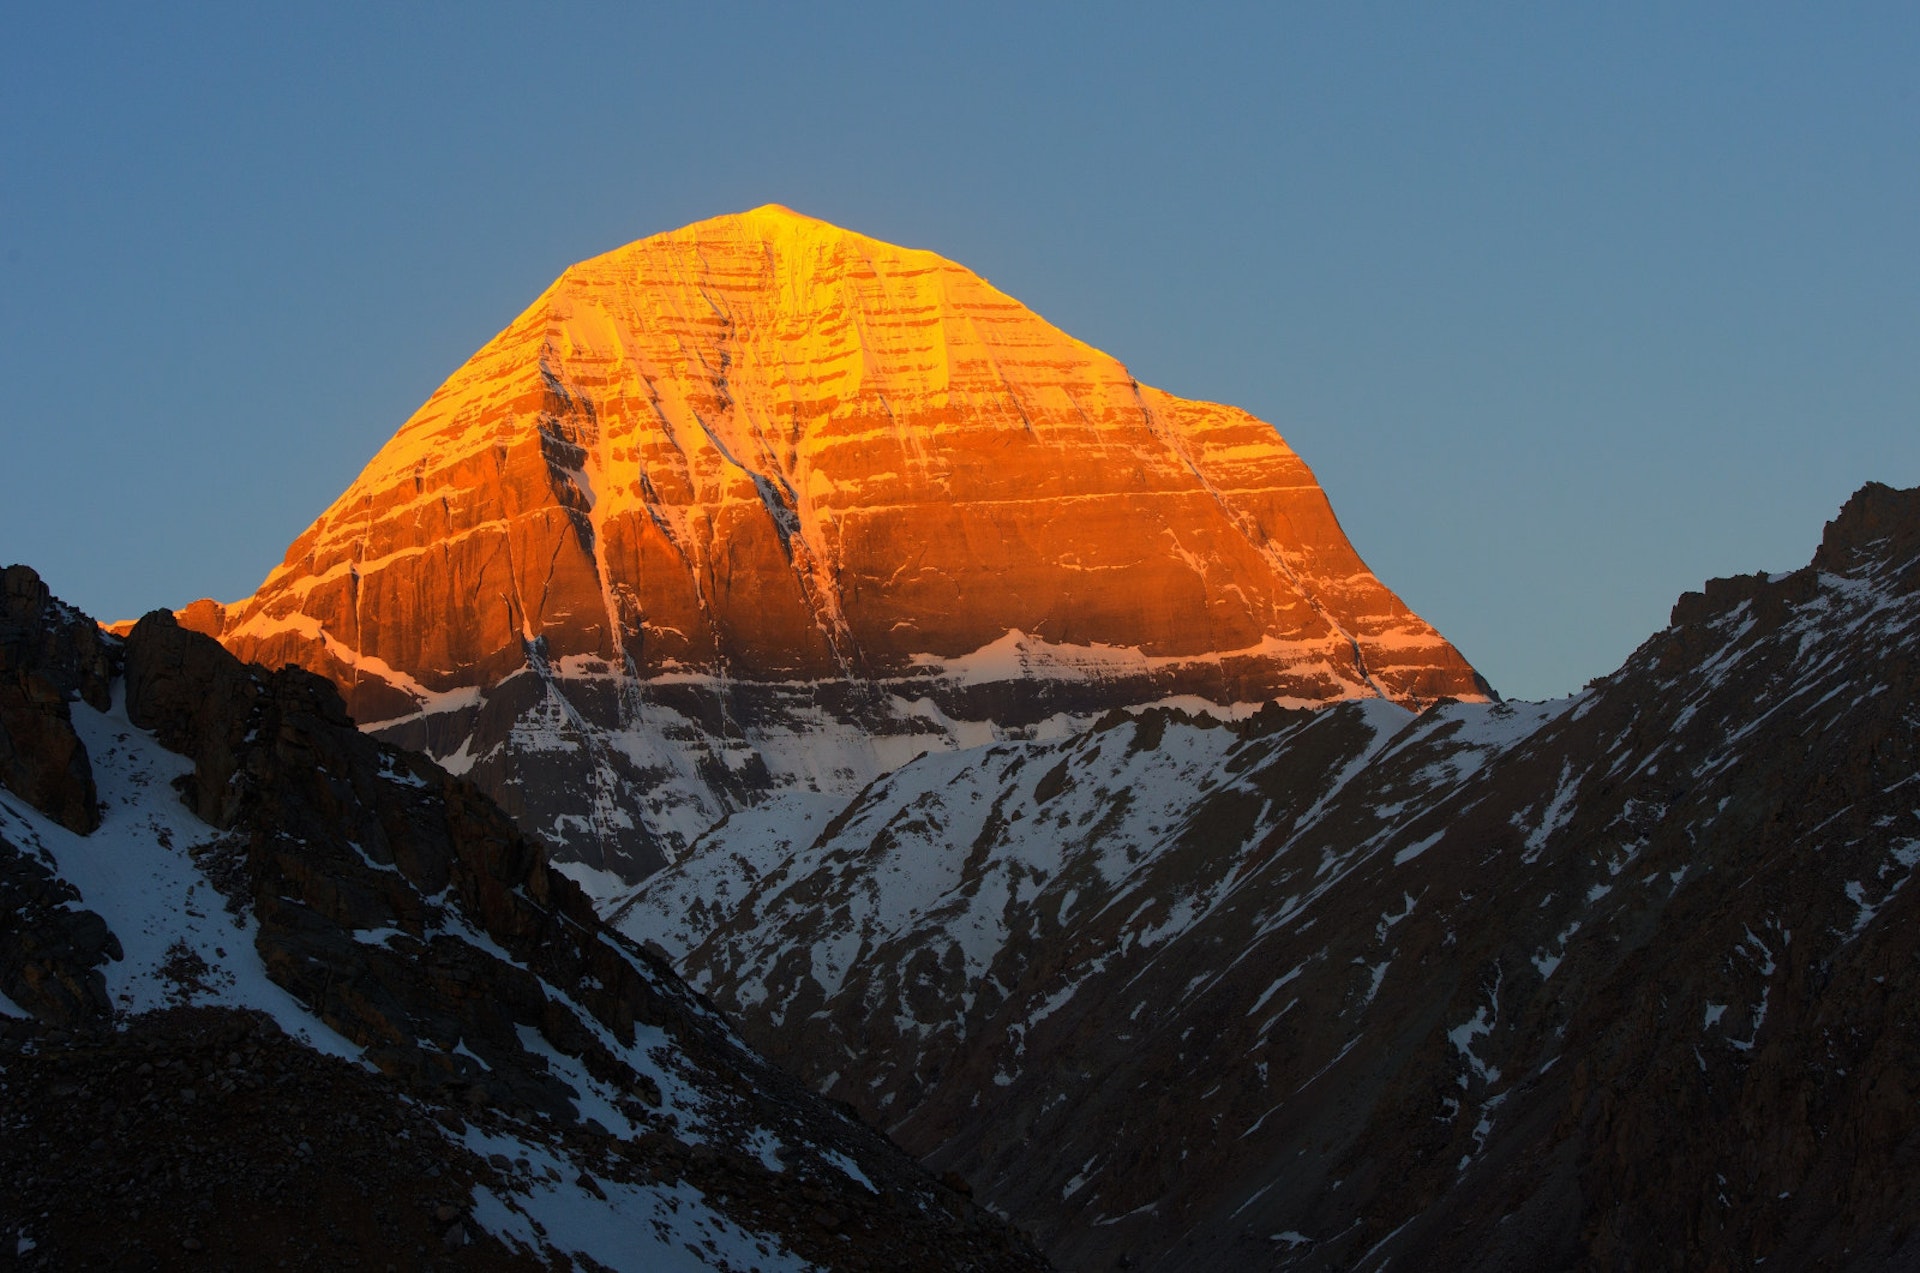 Visiting Mount Kailash